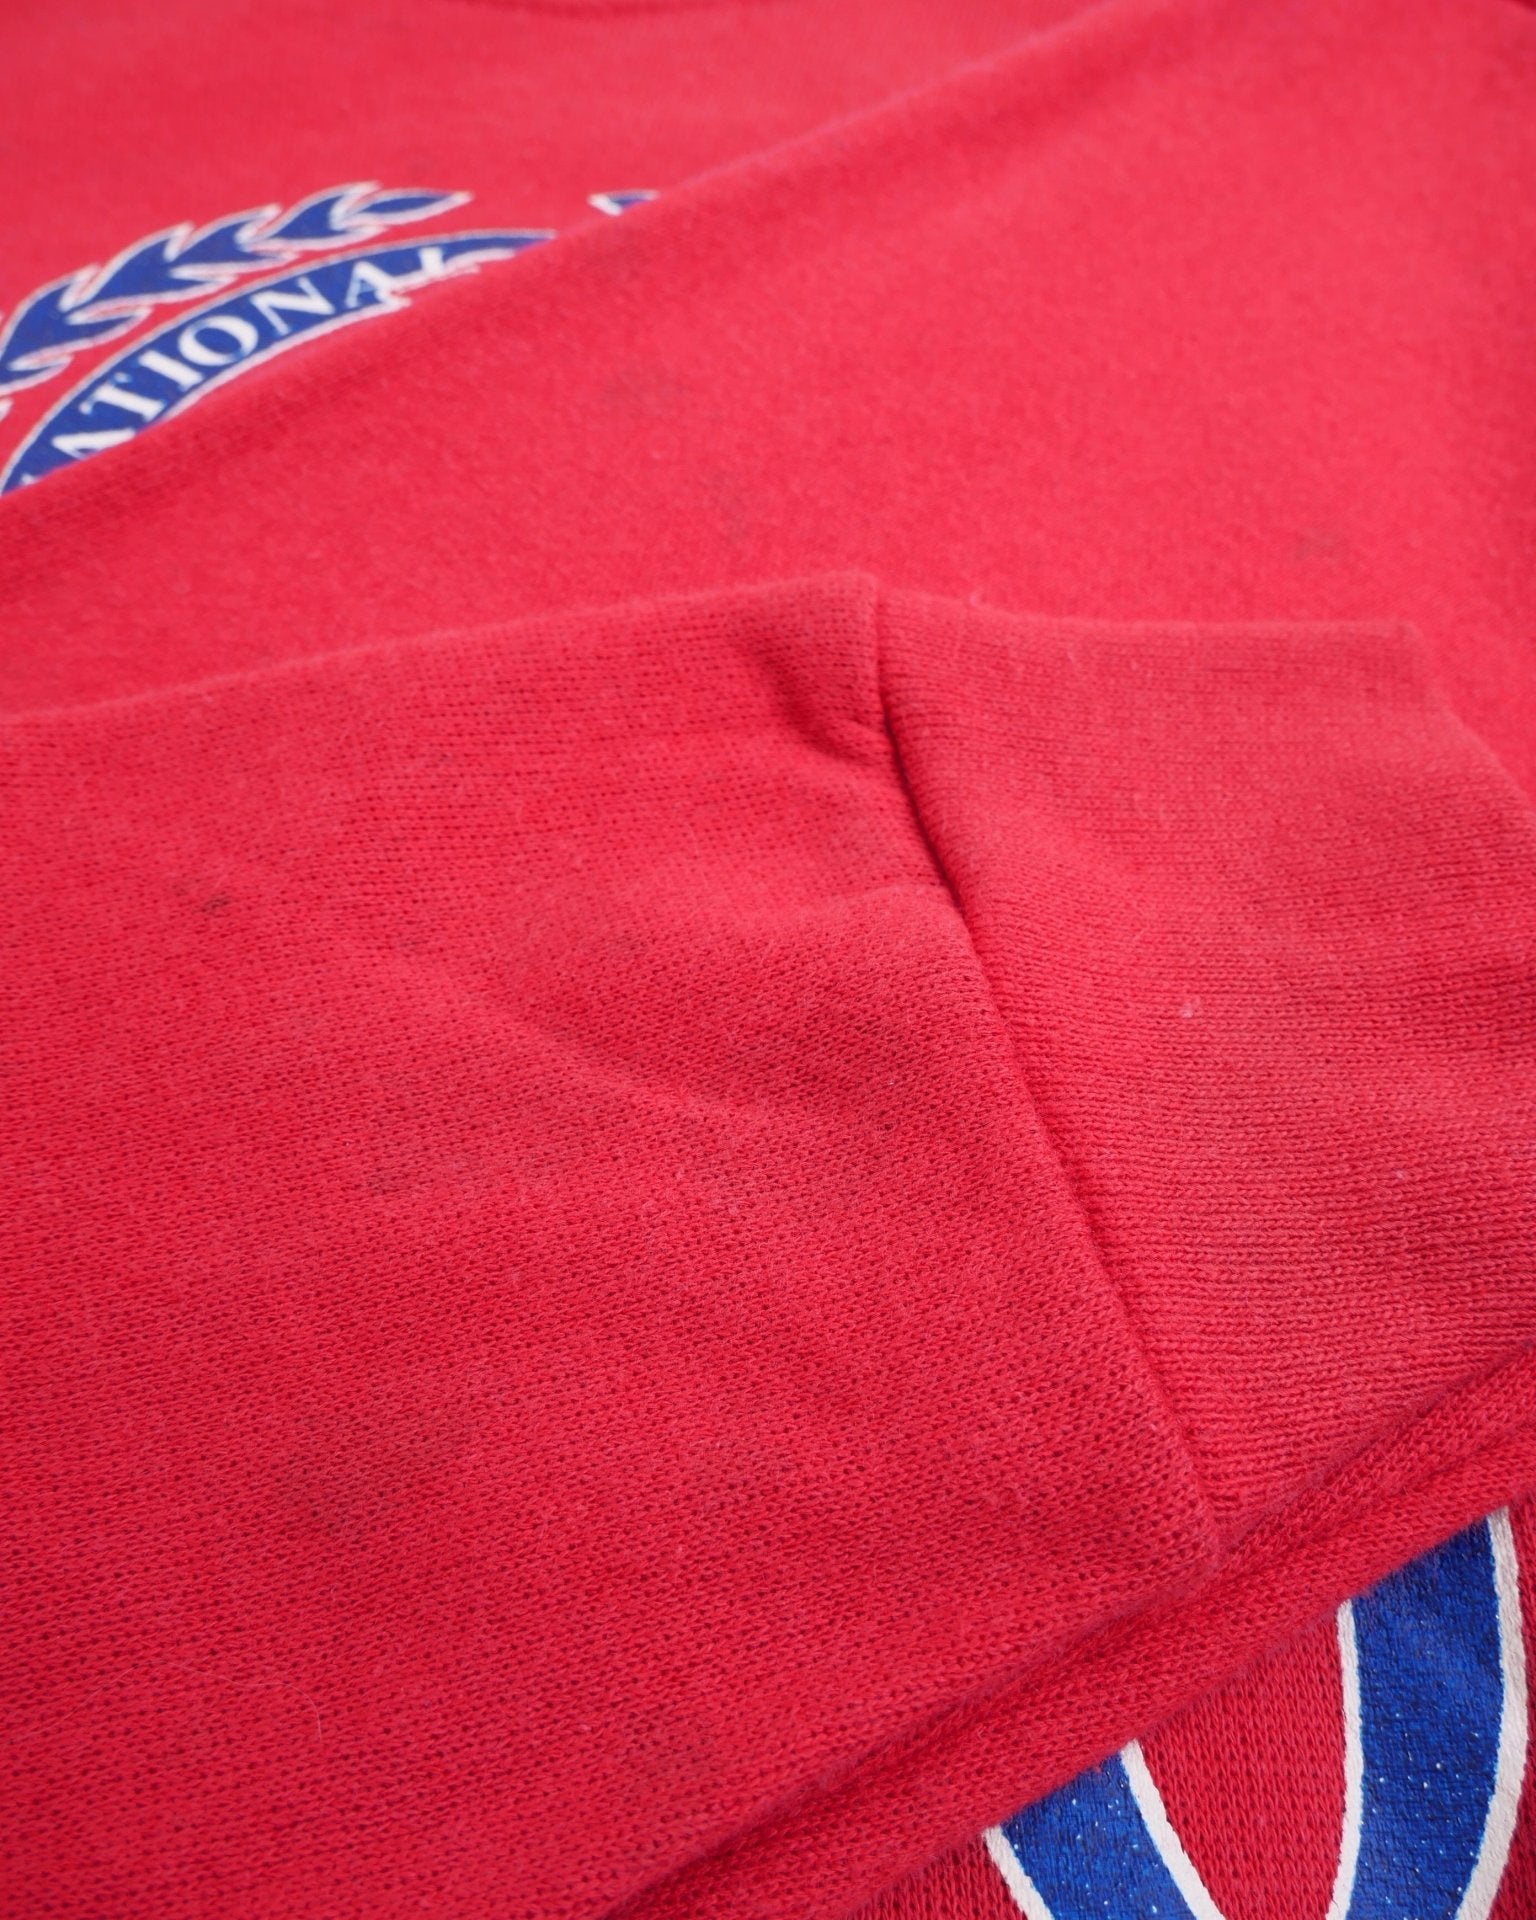 nfl New England Patriots printed Logo Vintage Sweater - Peeces